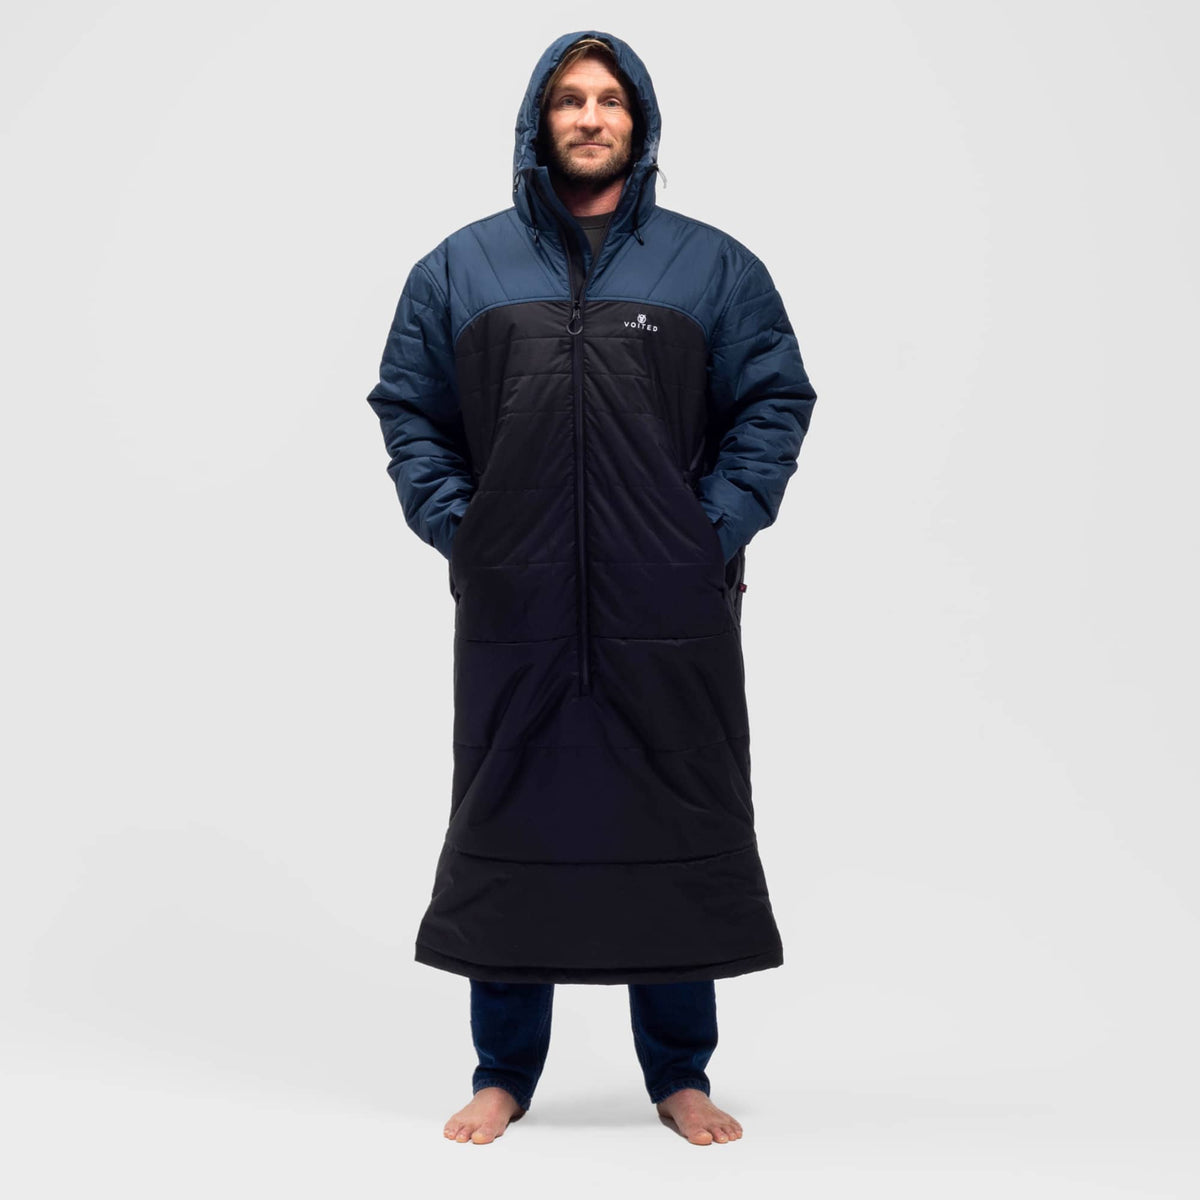 VOITED Premium Slumber Jacket for Camping, Vanlife & Indoor - Navy / Black / Navy Blankets VOITED 